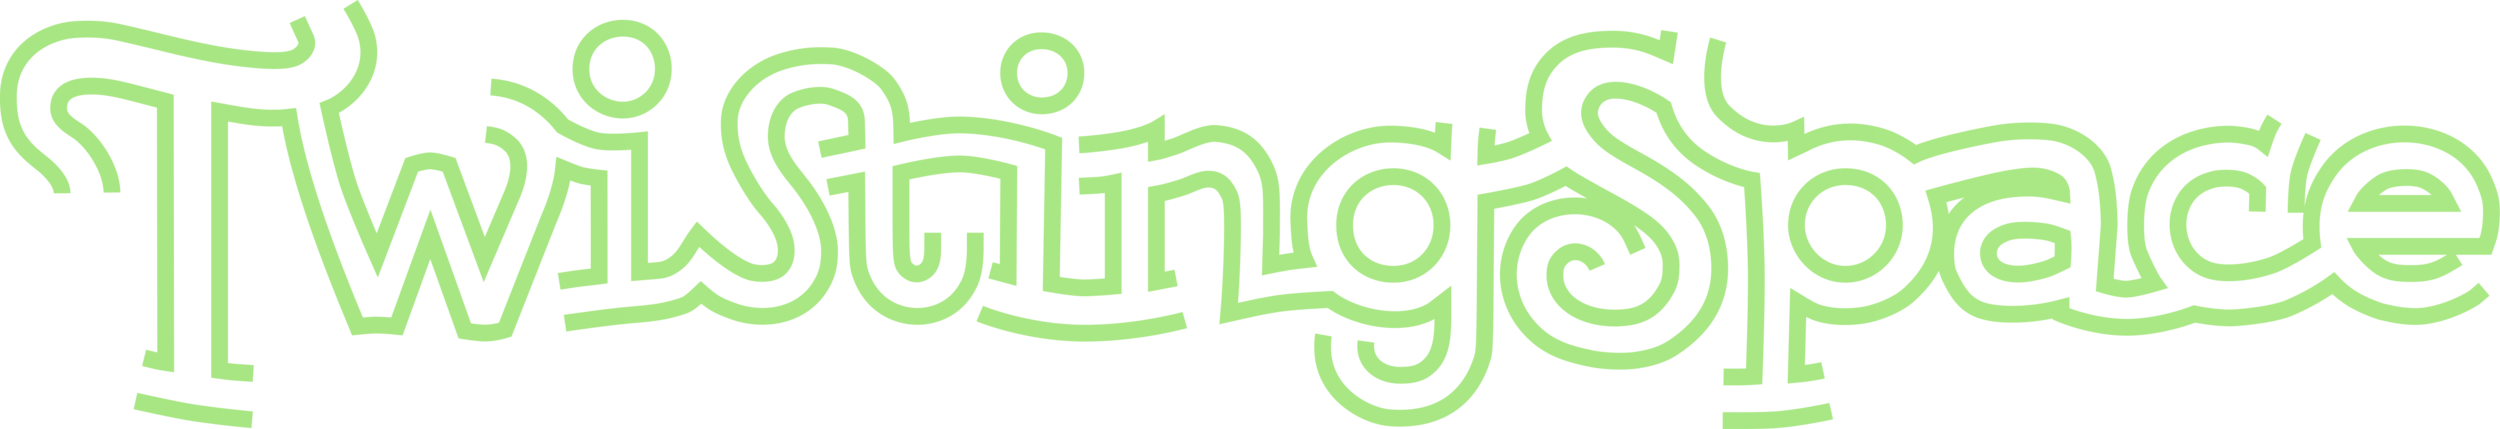 TwistingSpace logo